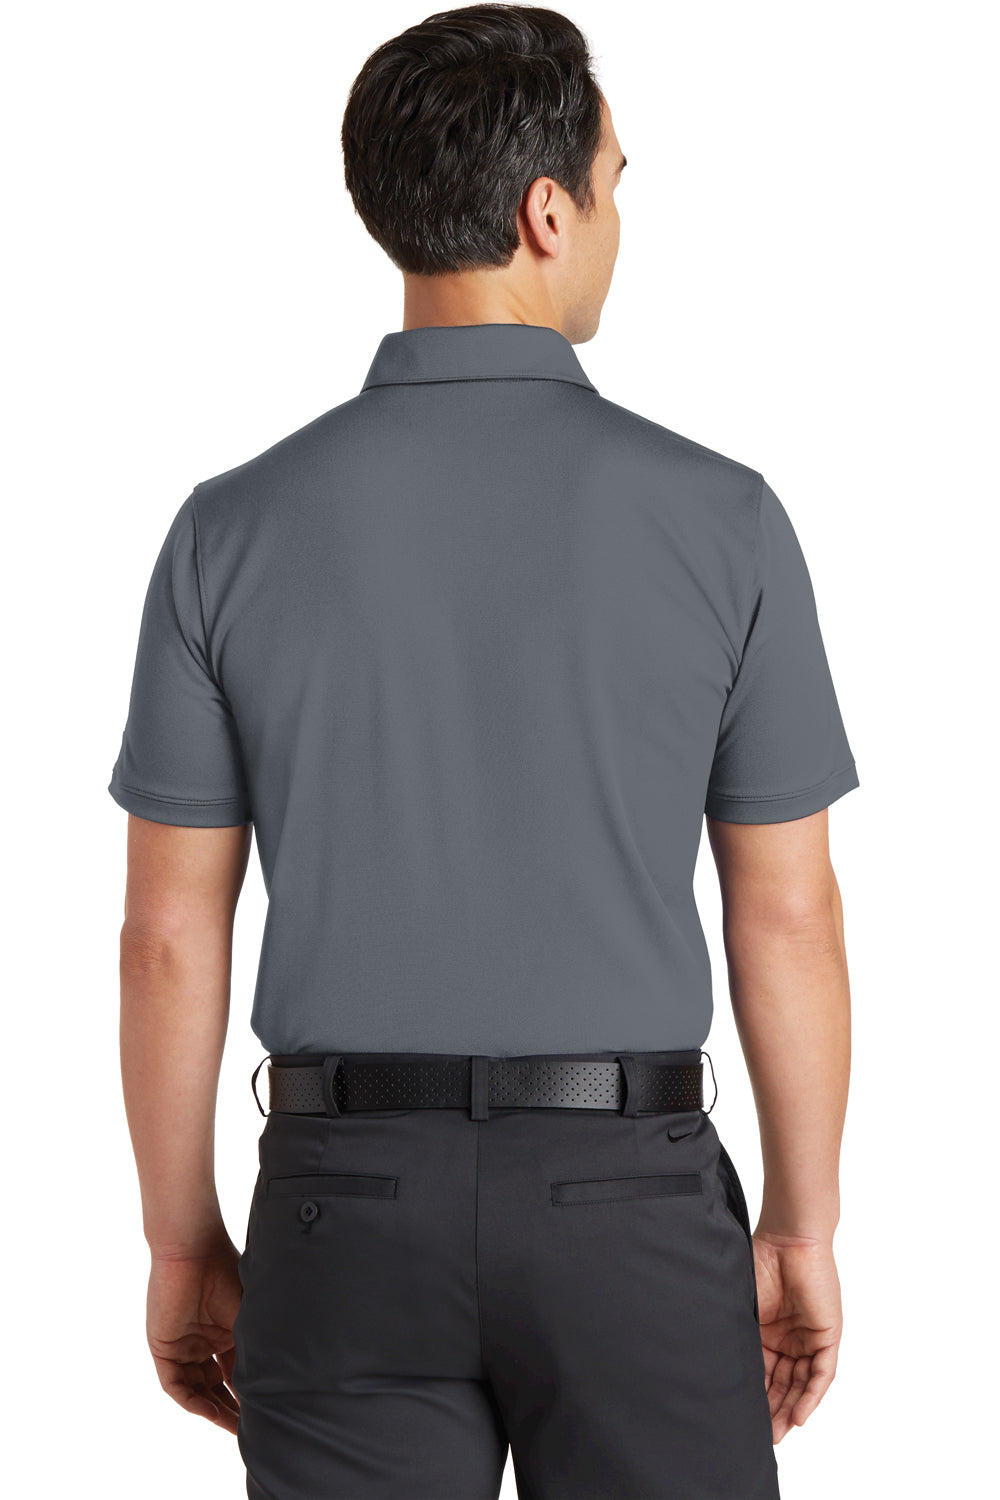 Nike 746099 Mens Icon Dri-Fit Moisture Wicking Short Sleeve Polo Shirt Dark Grey Model Back